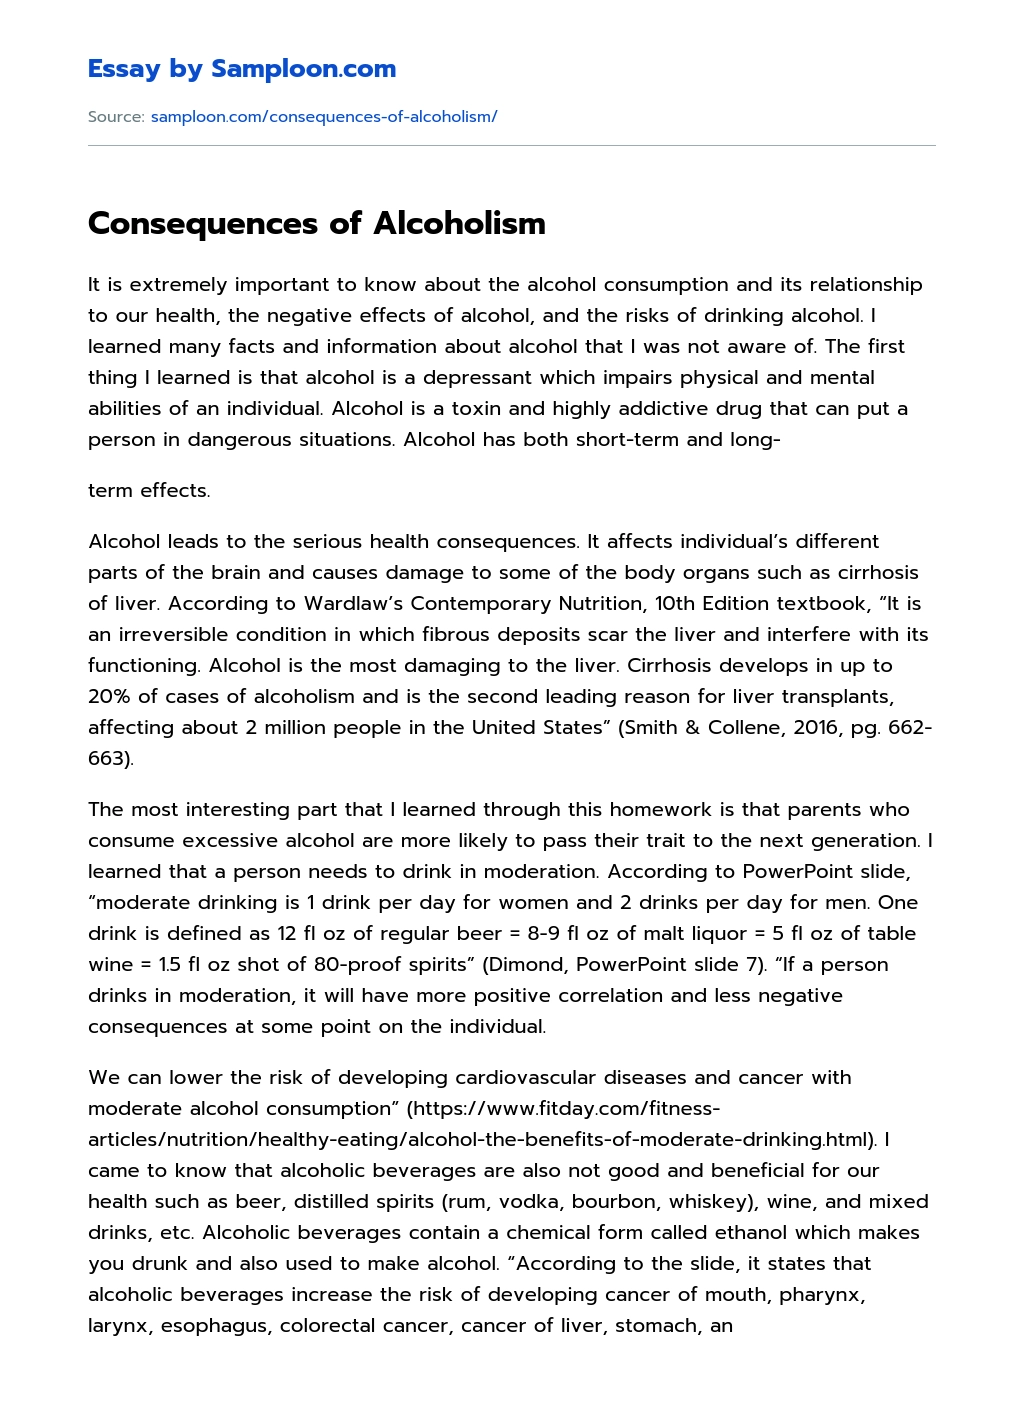 Consequences of Alcoholism essay